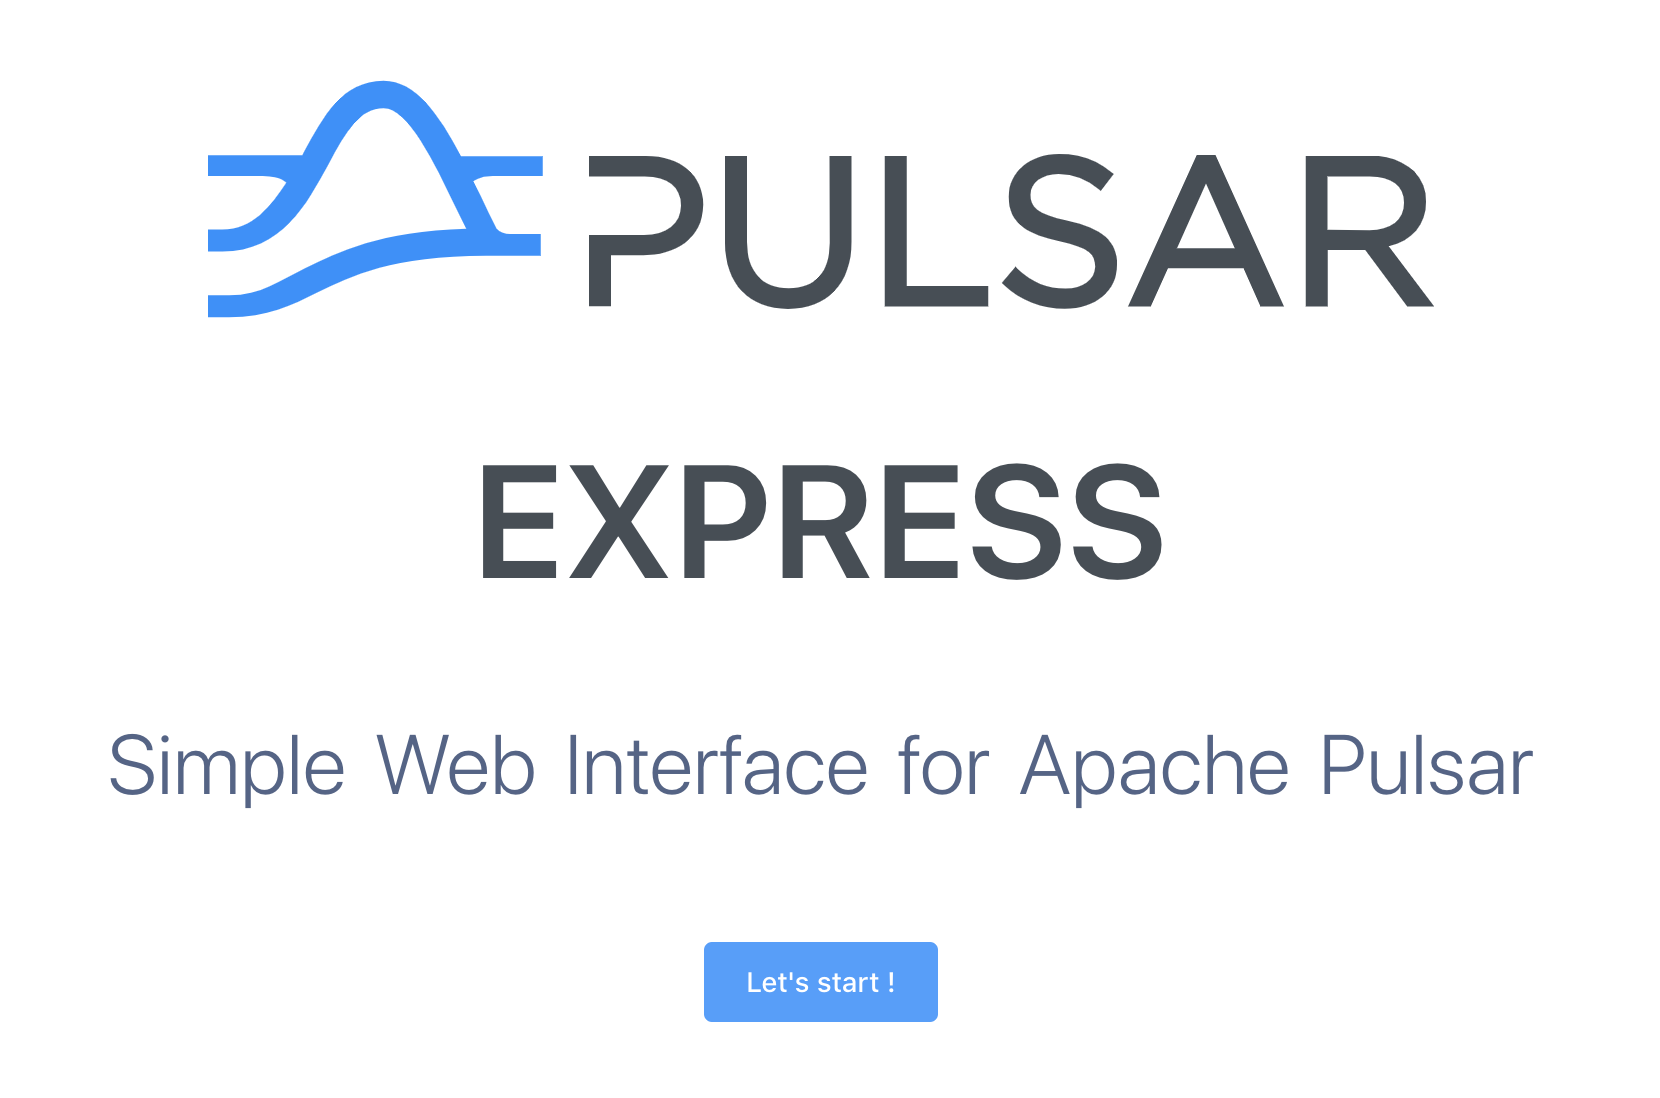 Pulsar express home